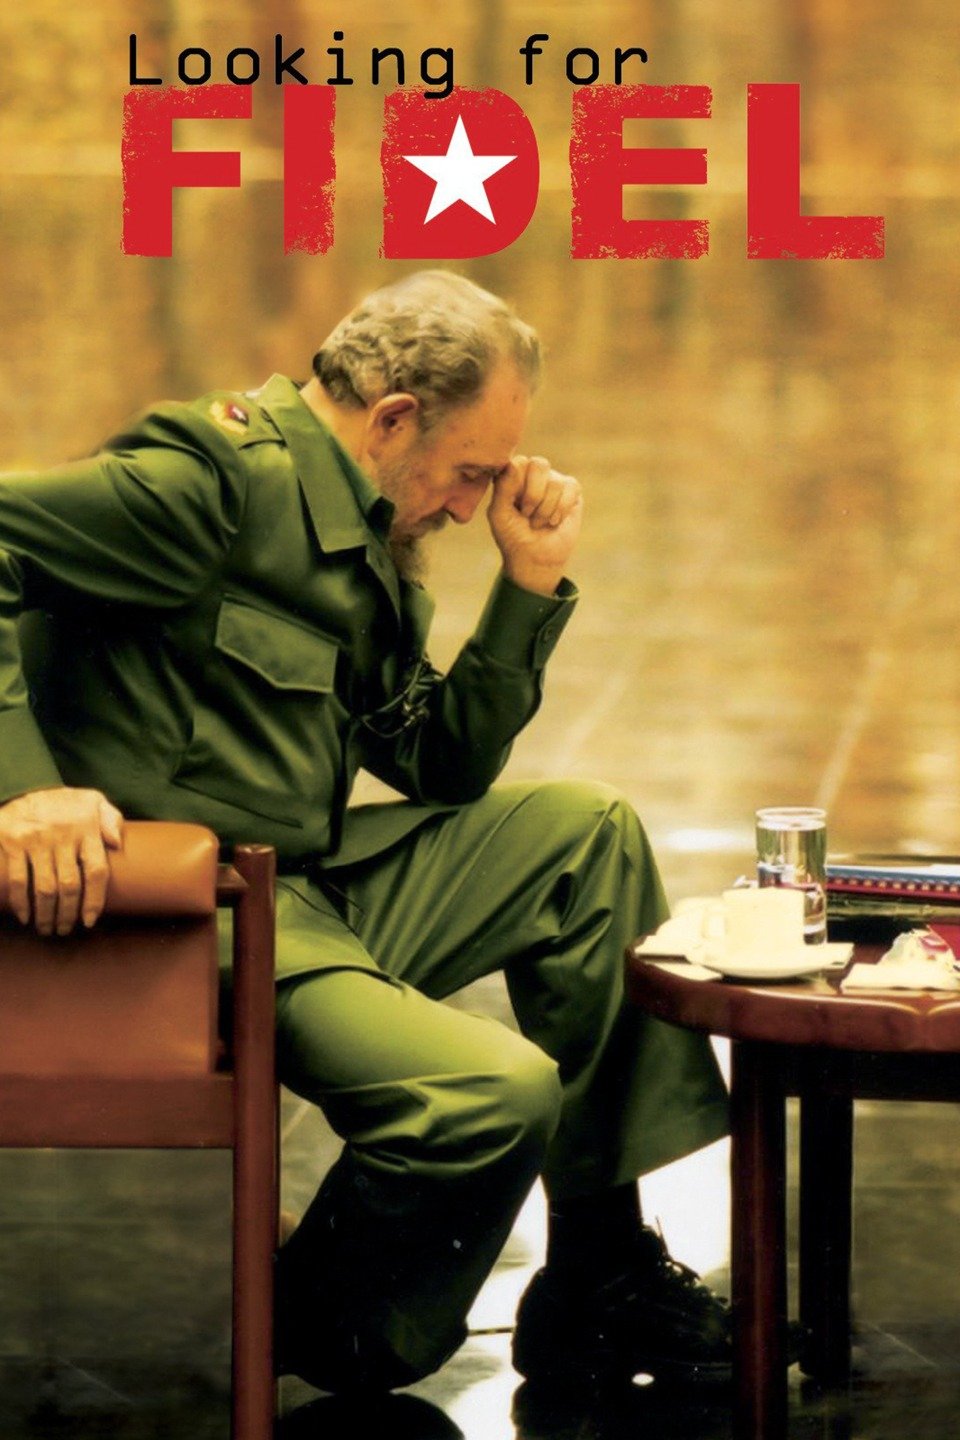 Looking for Fidel [Sub-ITA] (2004)